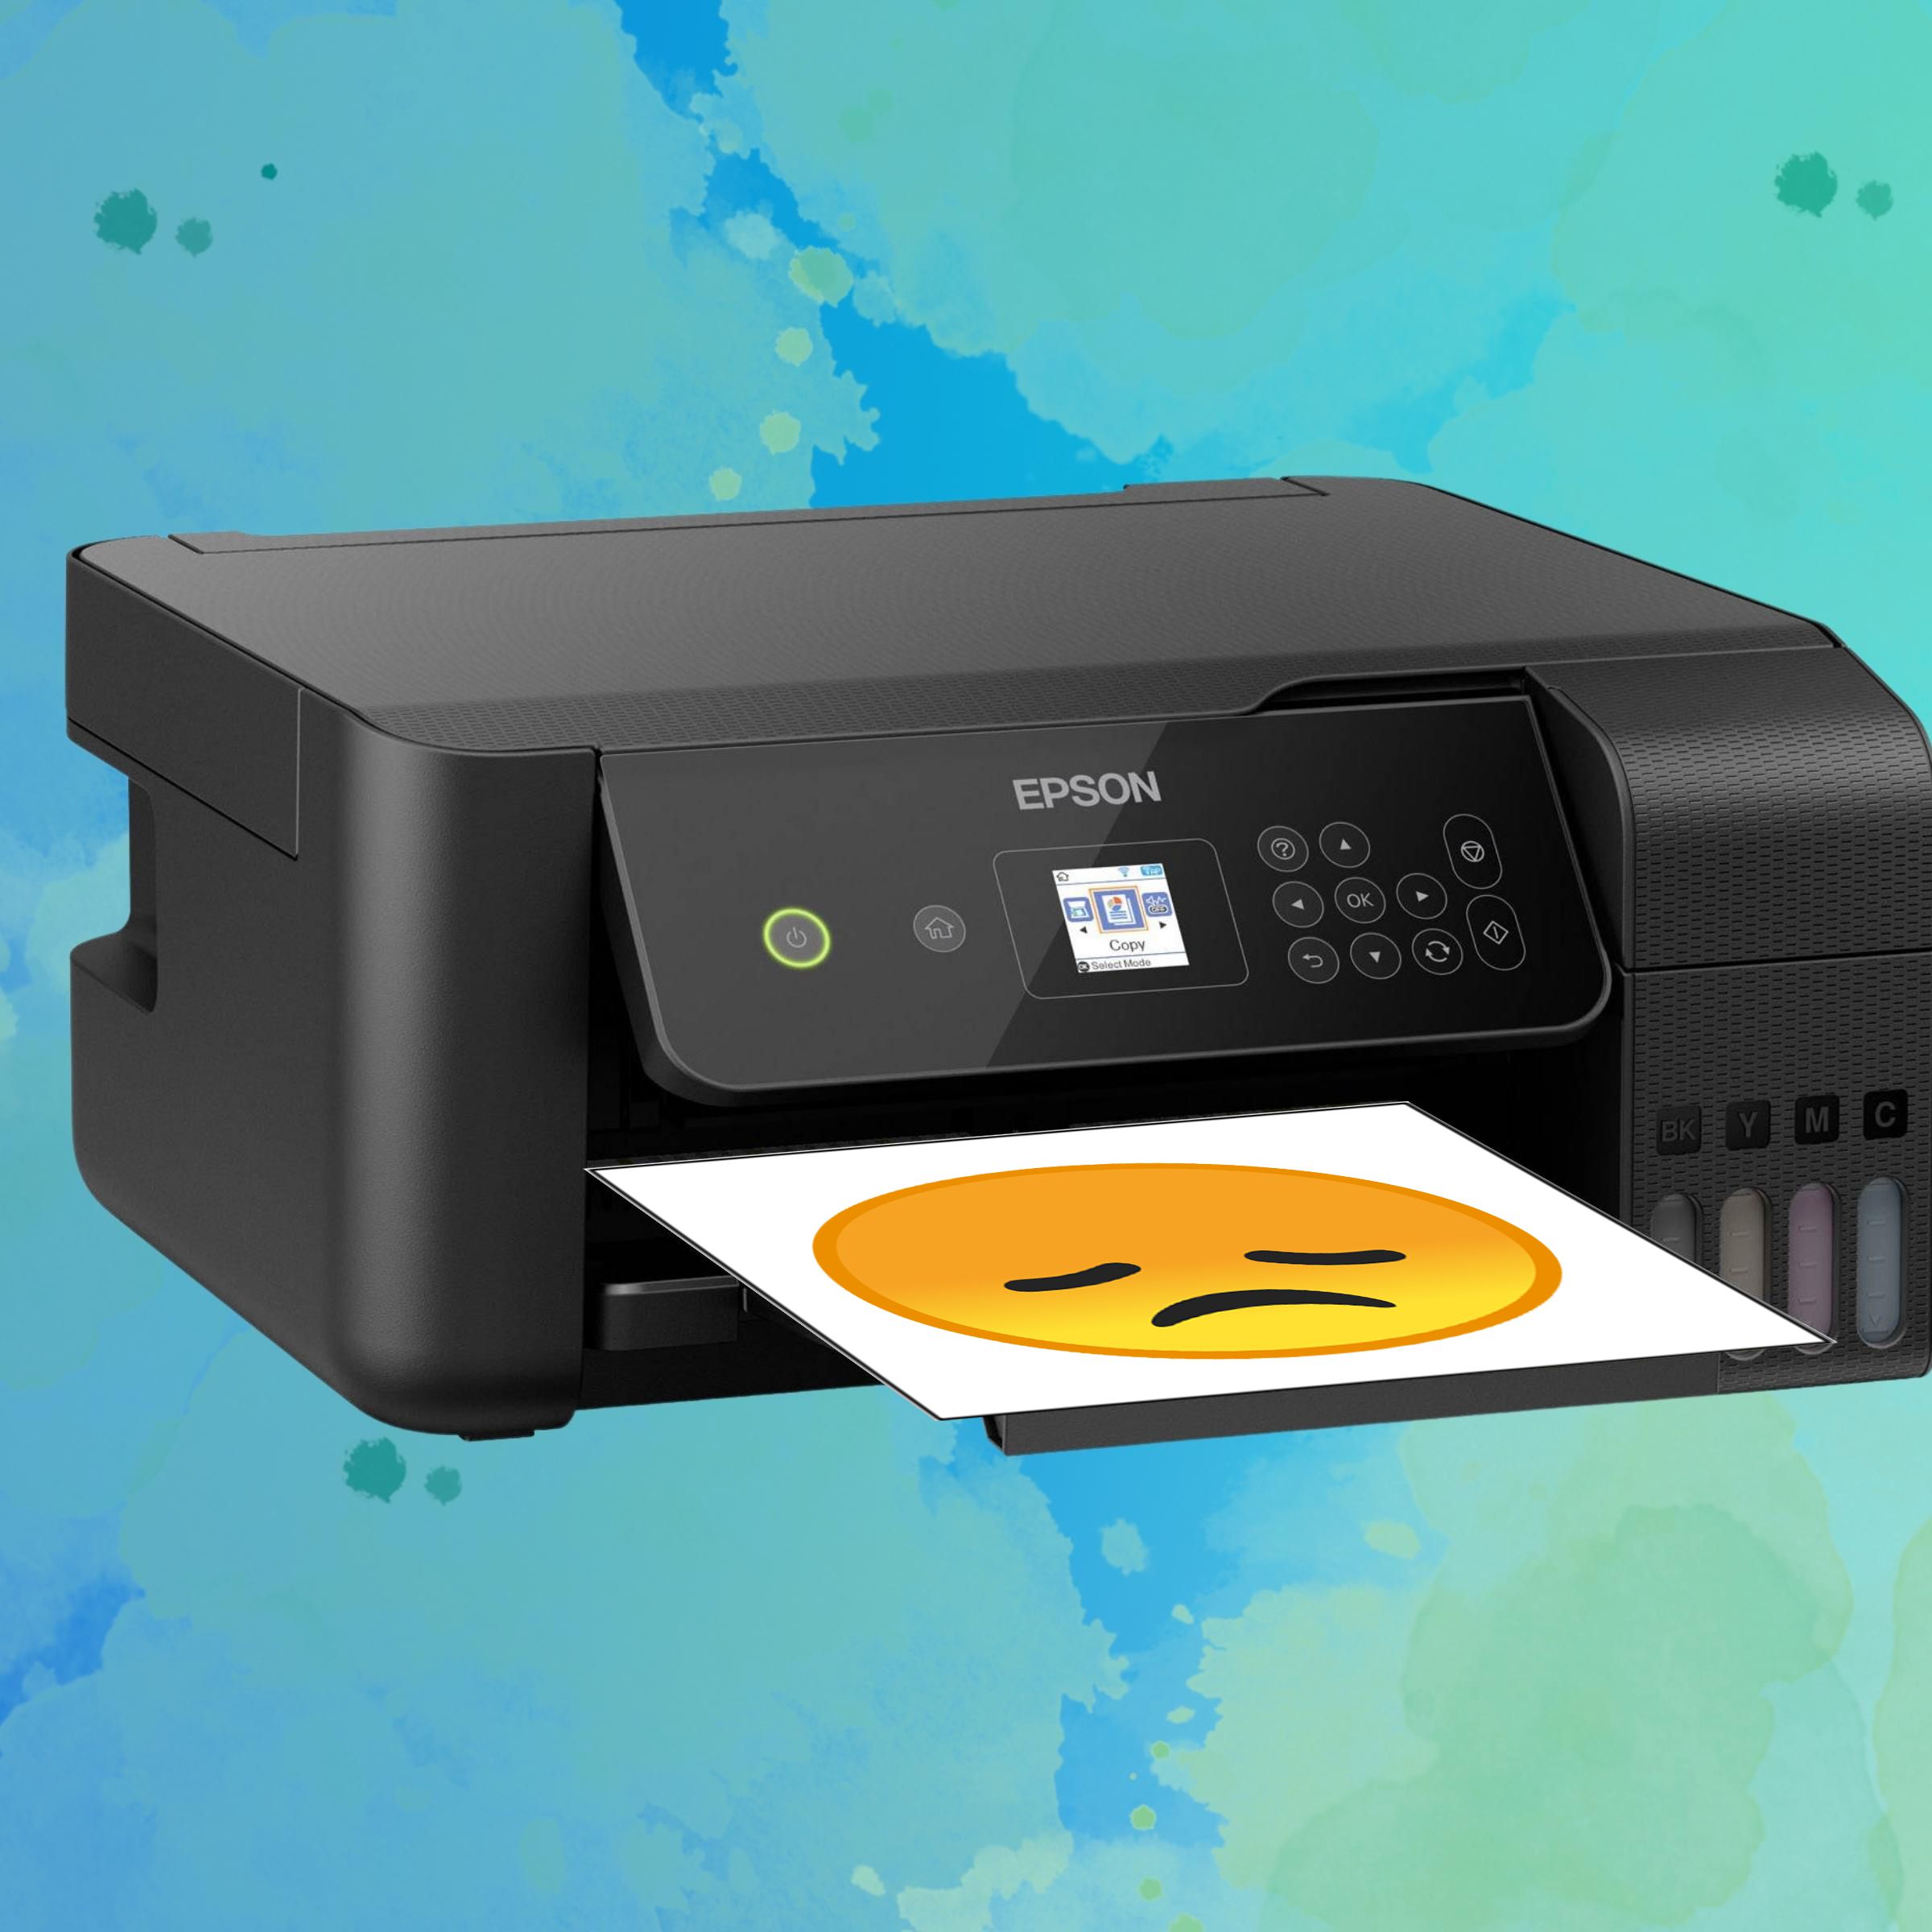 An Epson 2720 printer printing a sad emoji